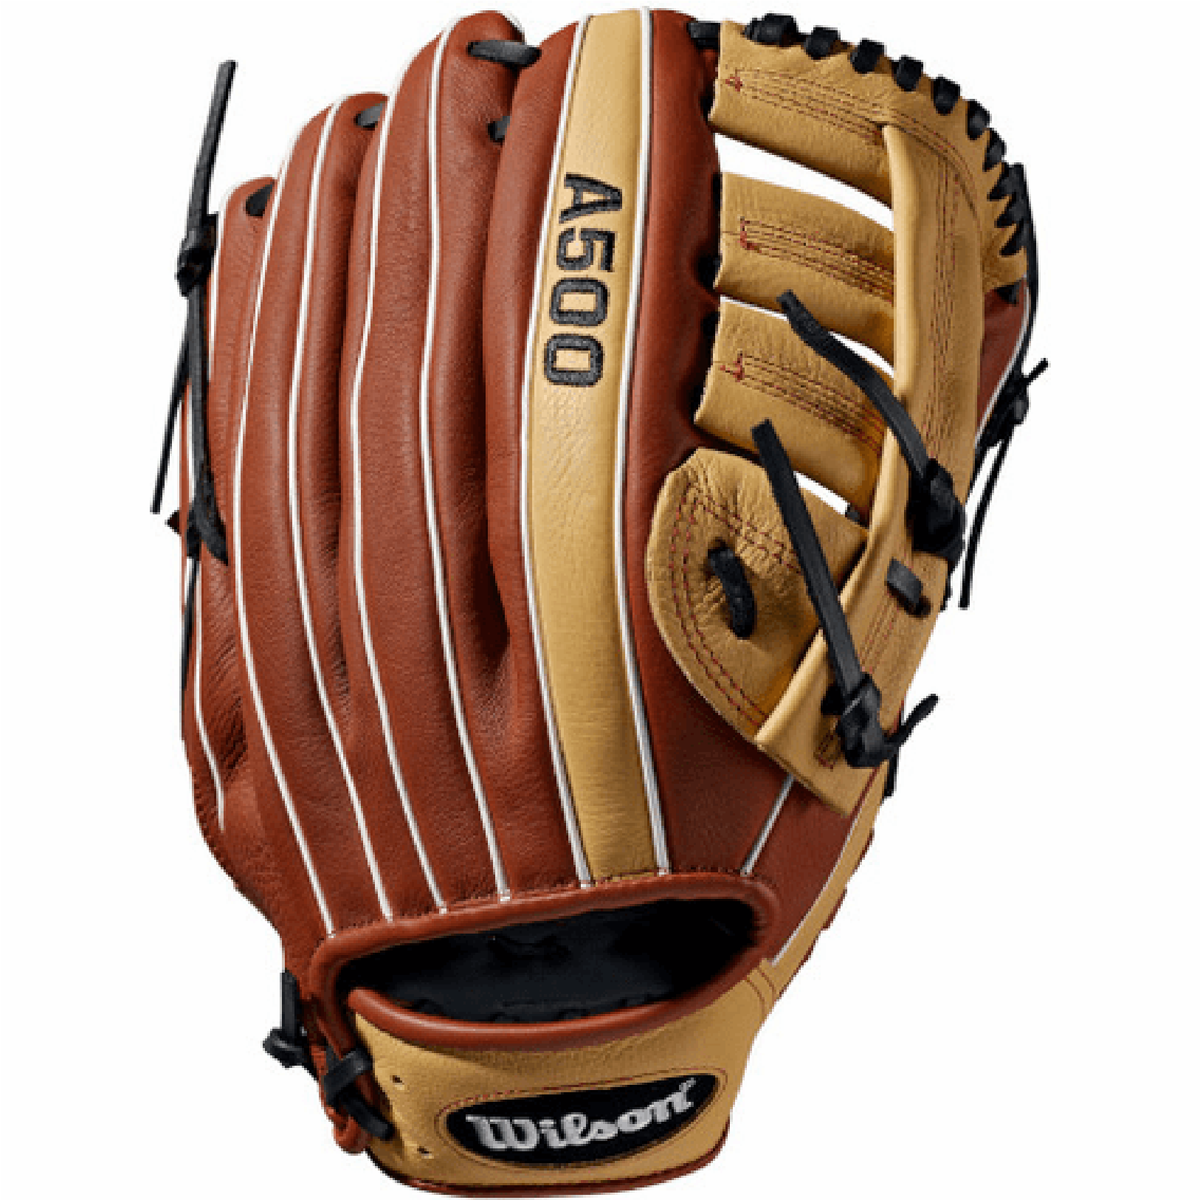 Wilson A500 12.5 inch Youth Baseball Glove - Left Hand Throw